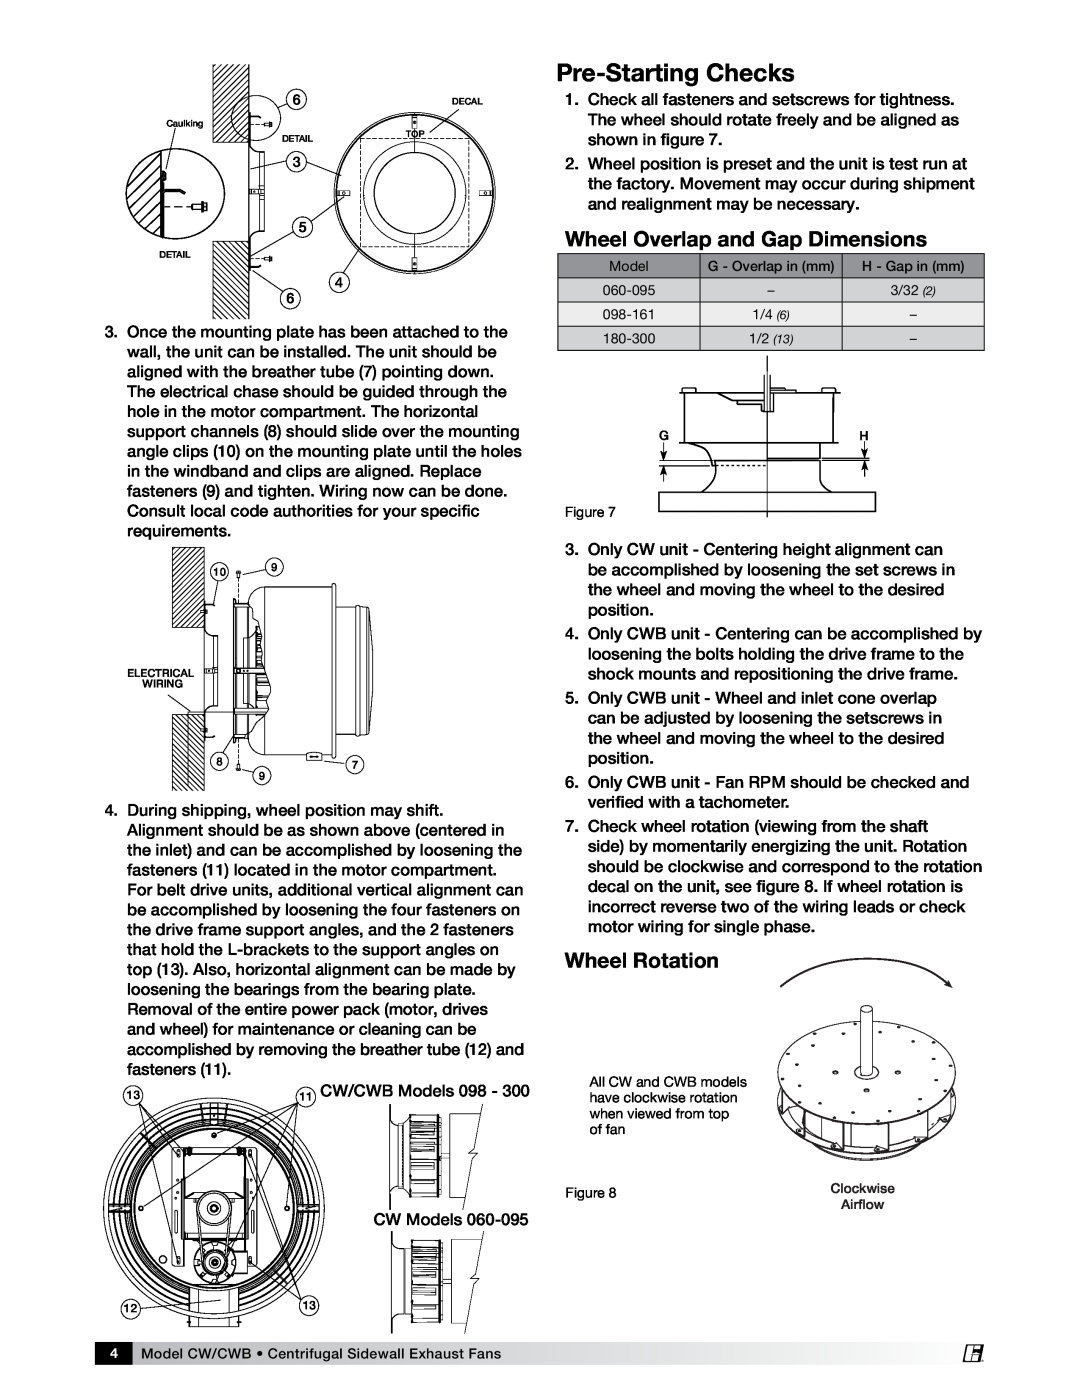 Greenheck Fan CW/CWB manual Pre-Starting Checks, Wheel Overlap and Gap Dimensions, Wheel Rotation 